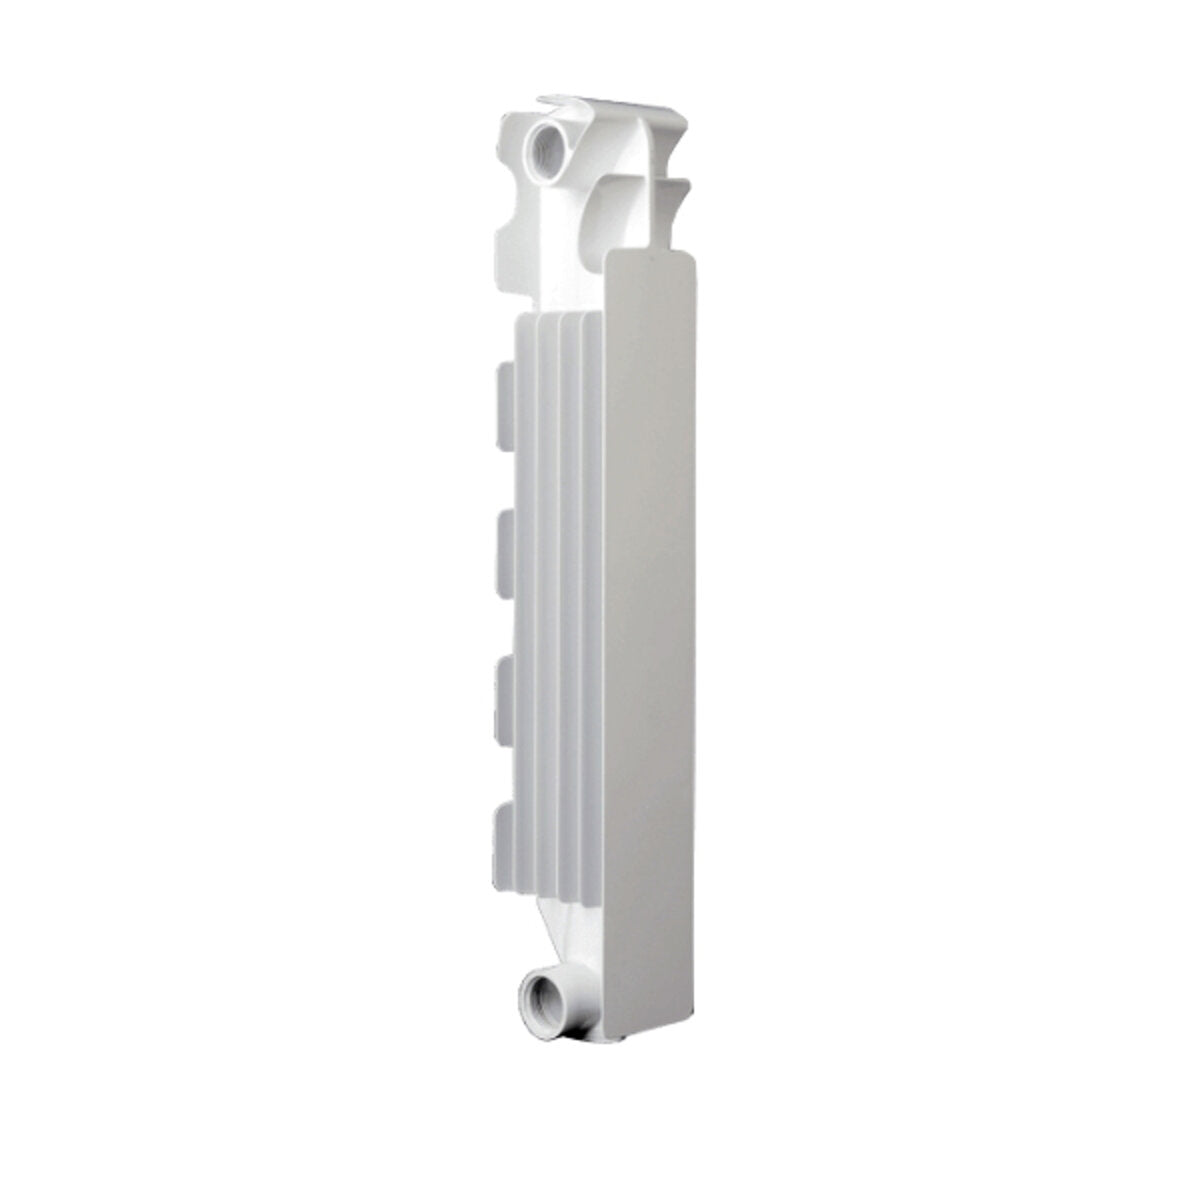 Fondital radiator in die-cast aluminum calidor super b4 single element center distance 800 mm